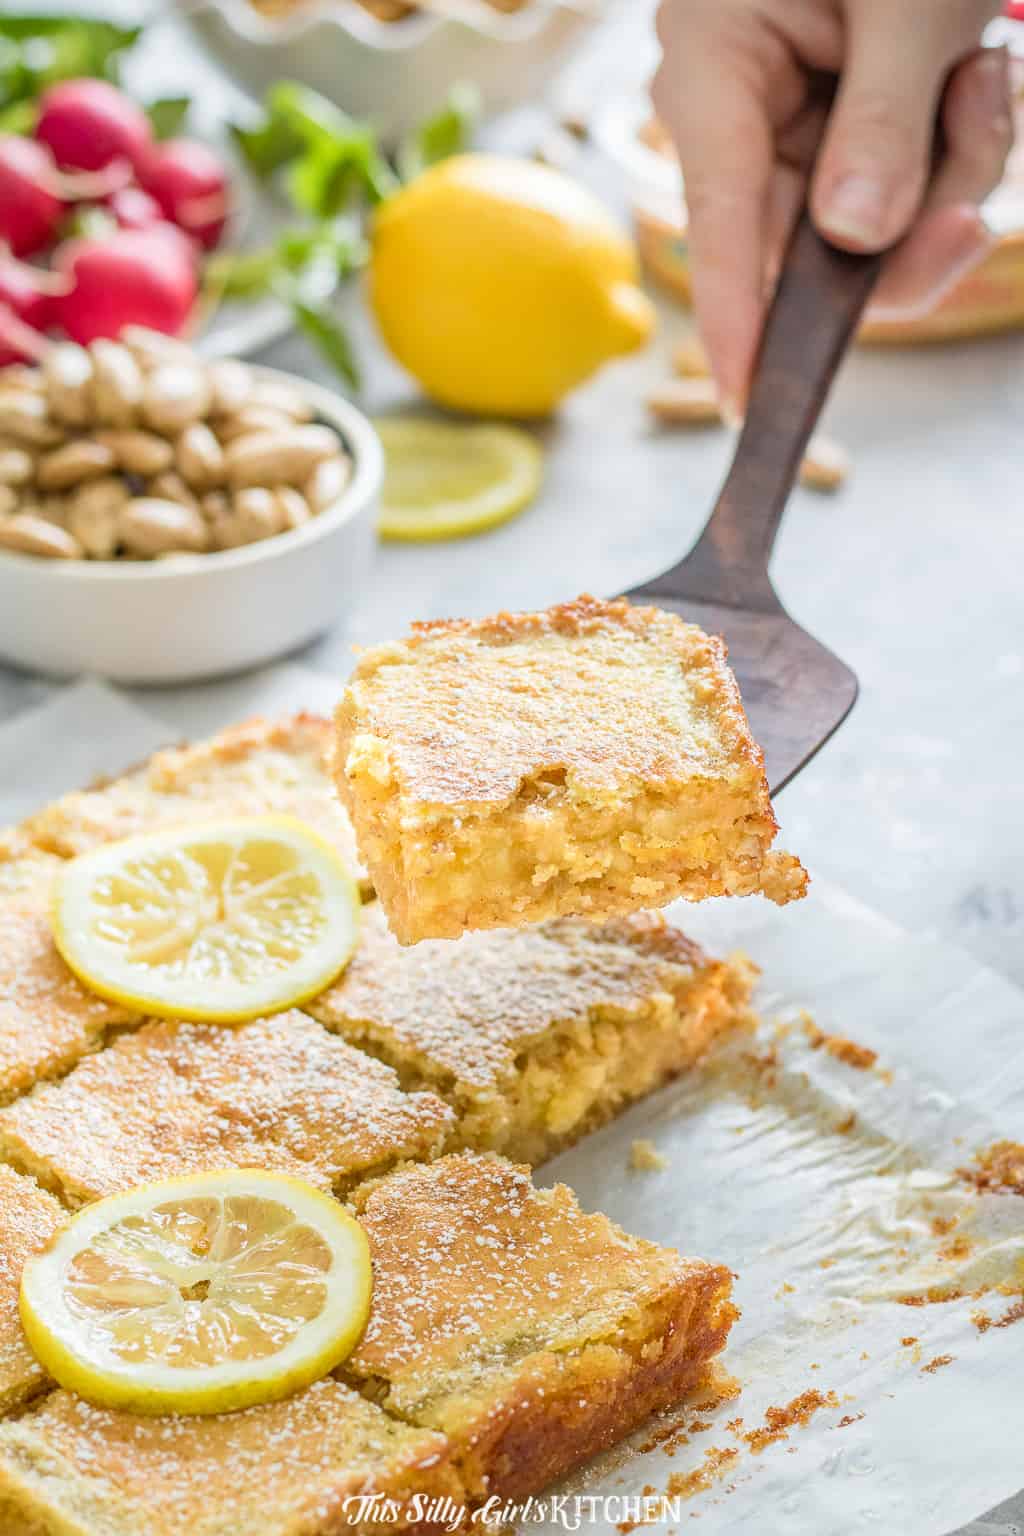 Gooey lemon bars are bursting with bright citrusy flavors, perfect for summer. #Recipe from ThisSillyGirlsKitchen.com #lemonbars #oatmealbars #almond #lemon